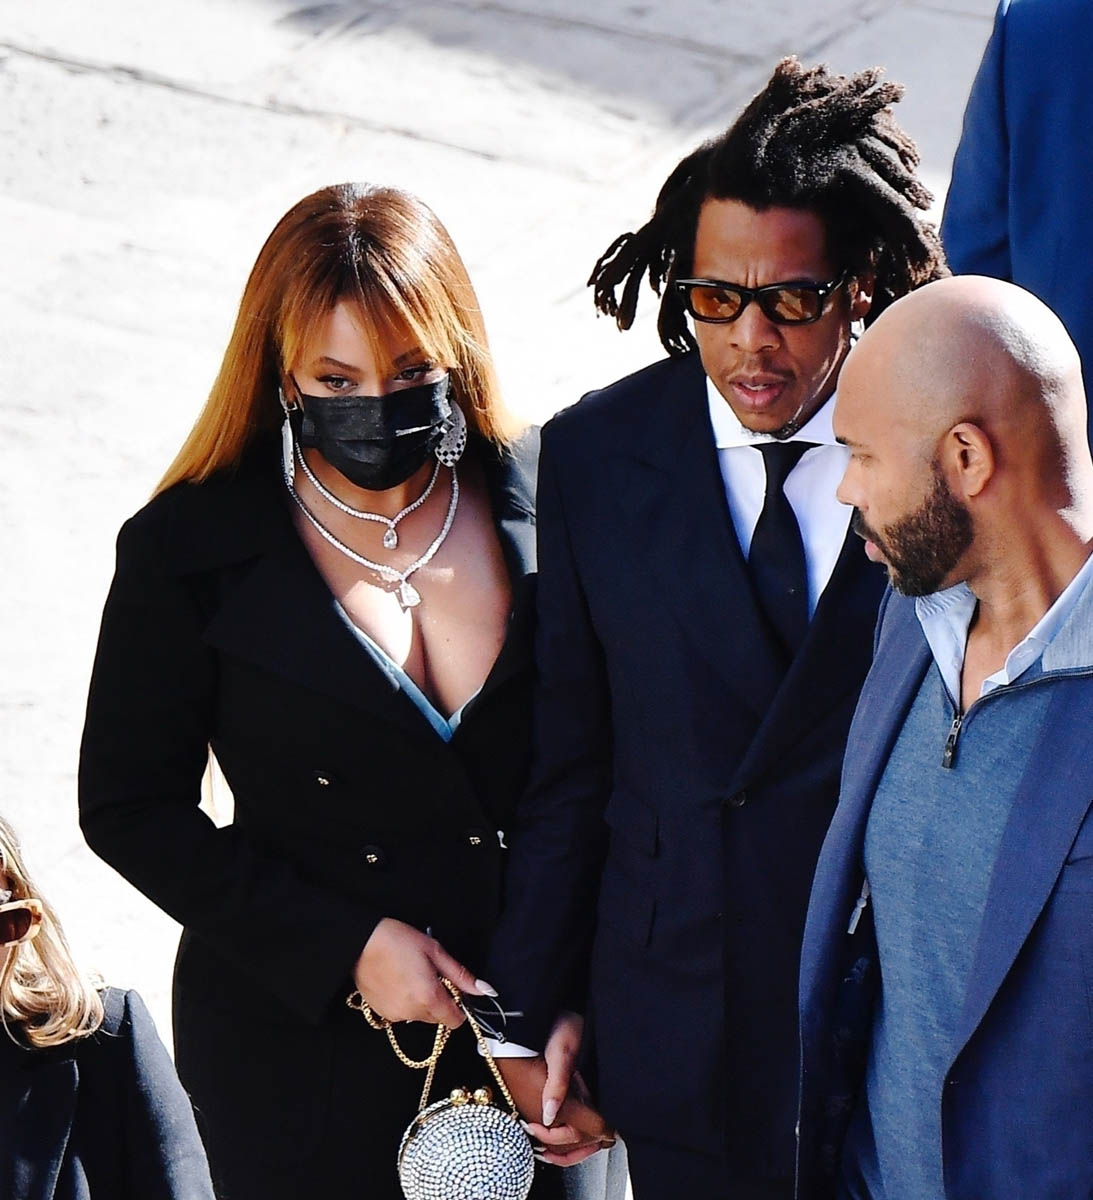 Masked Beyoncé attends Alexandre Arnault's star studded wedding